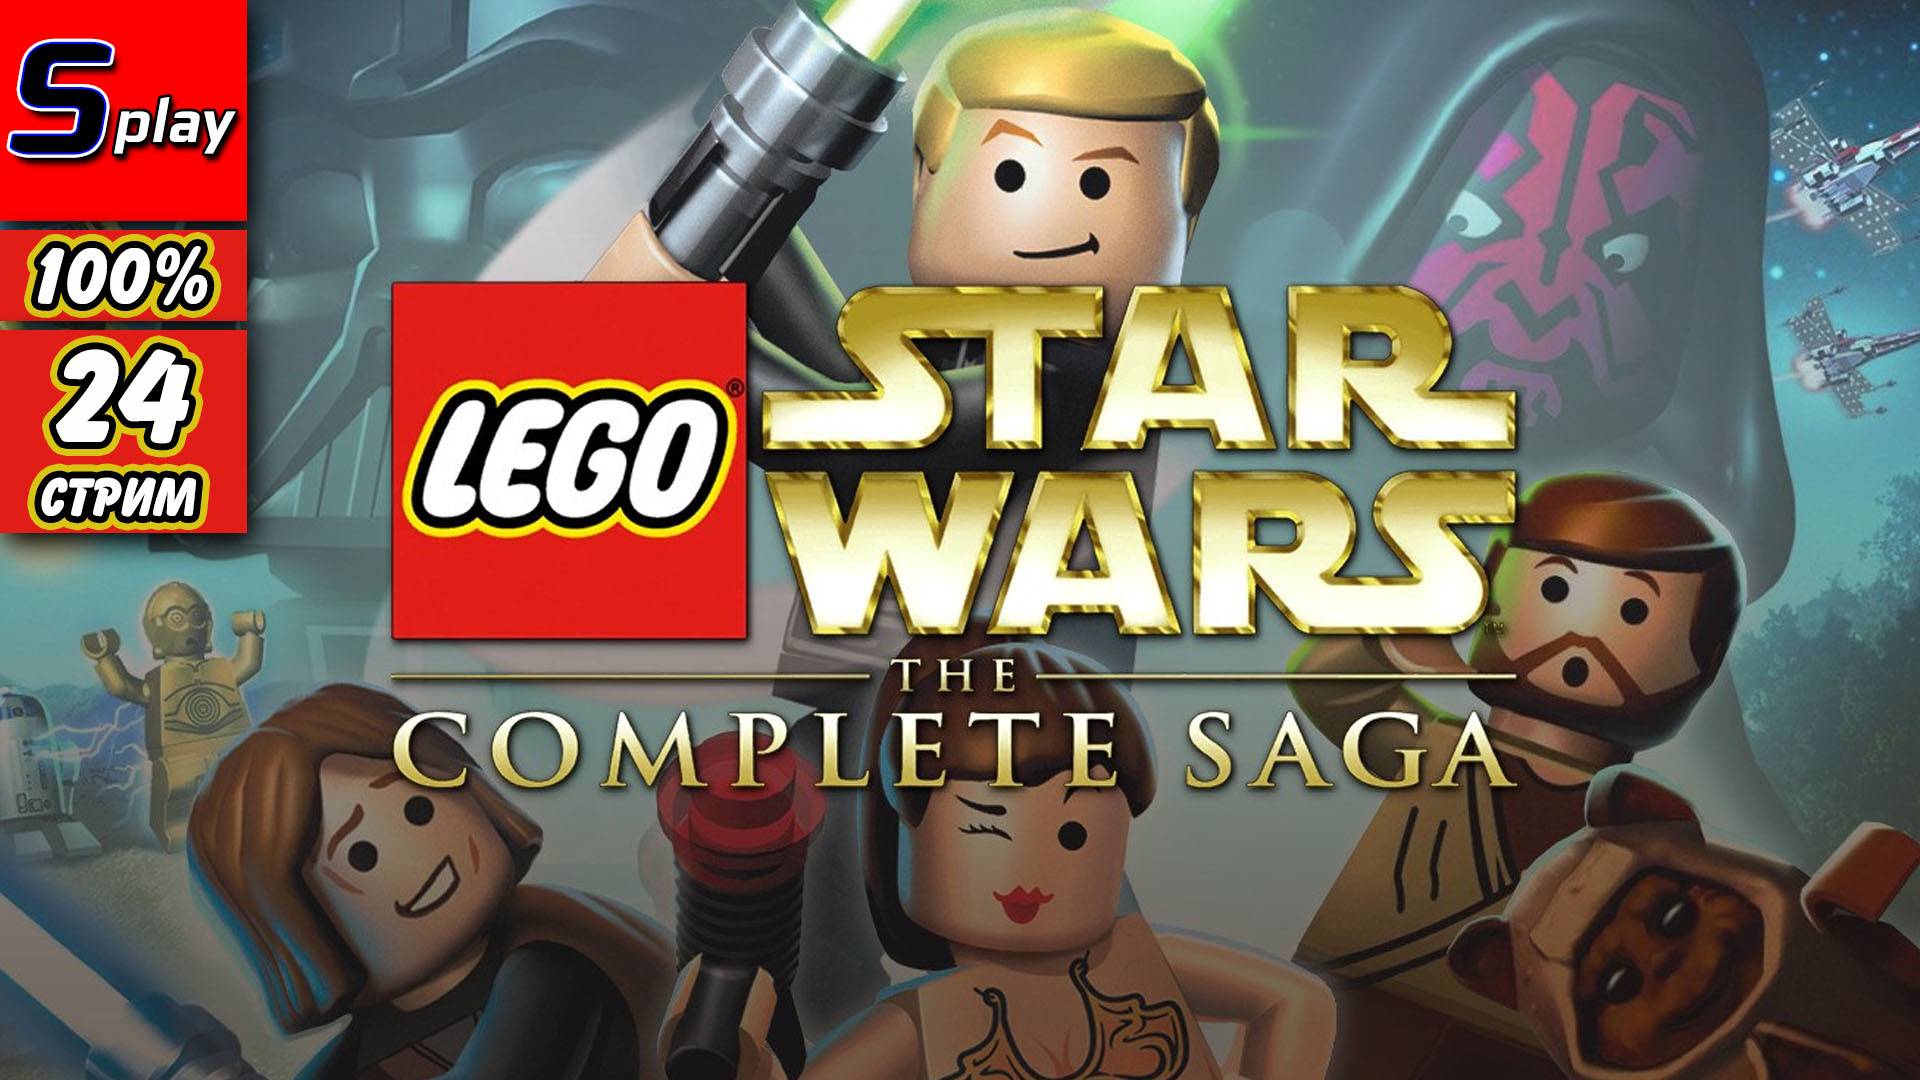 Lego Star Wars The Complete Saga на 100% - [24-стрим] - Собирательство